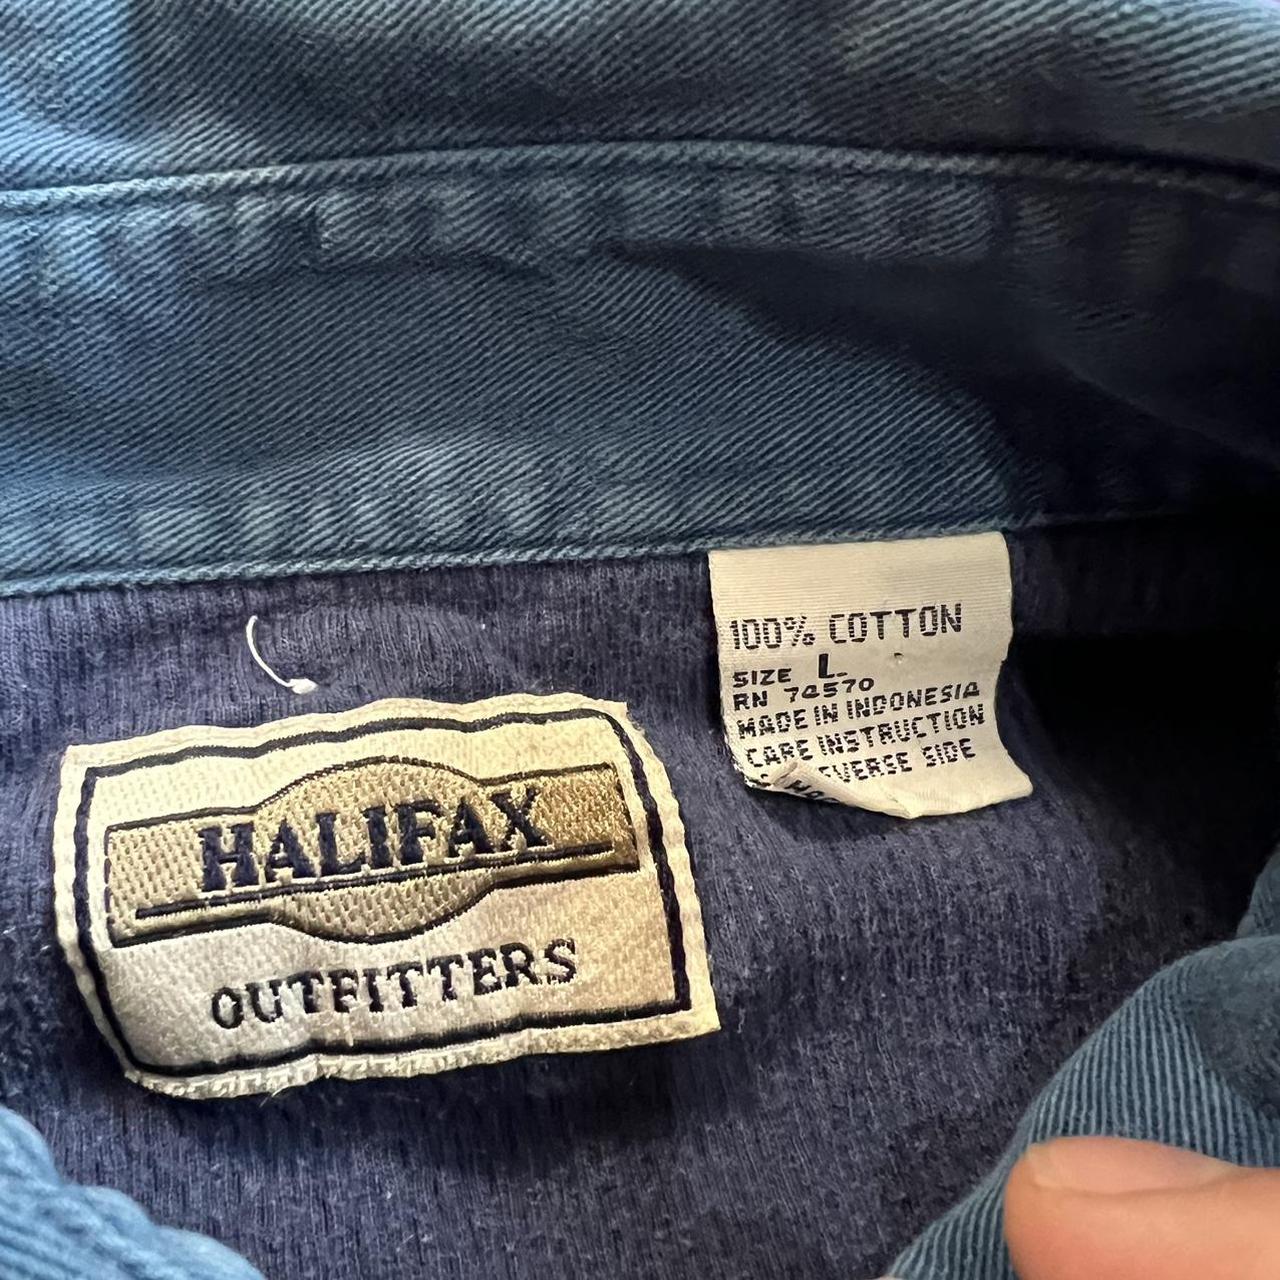 Halifax Men's Grey Shirt (2)